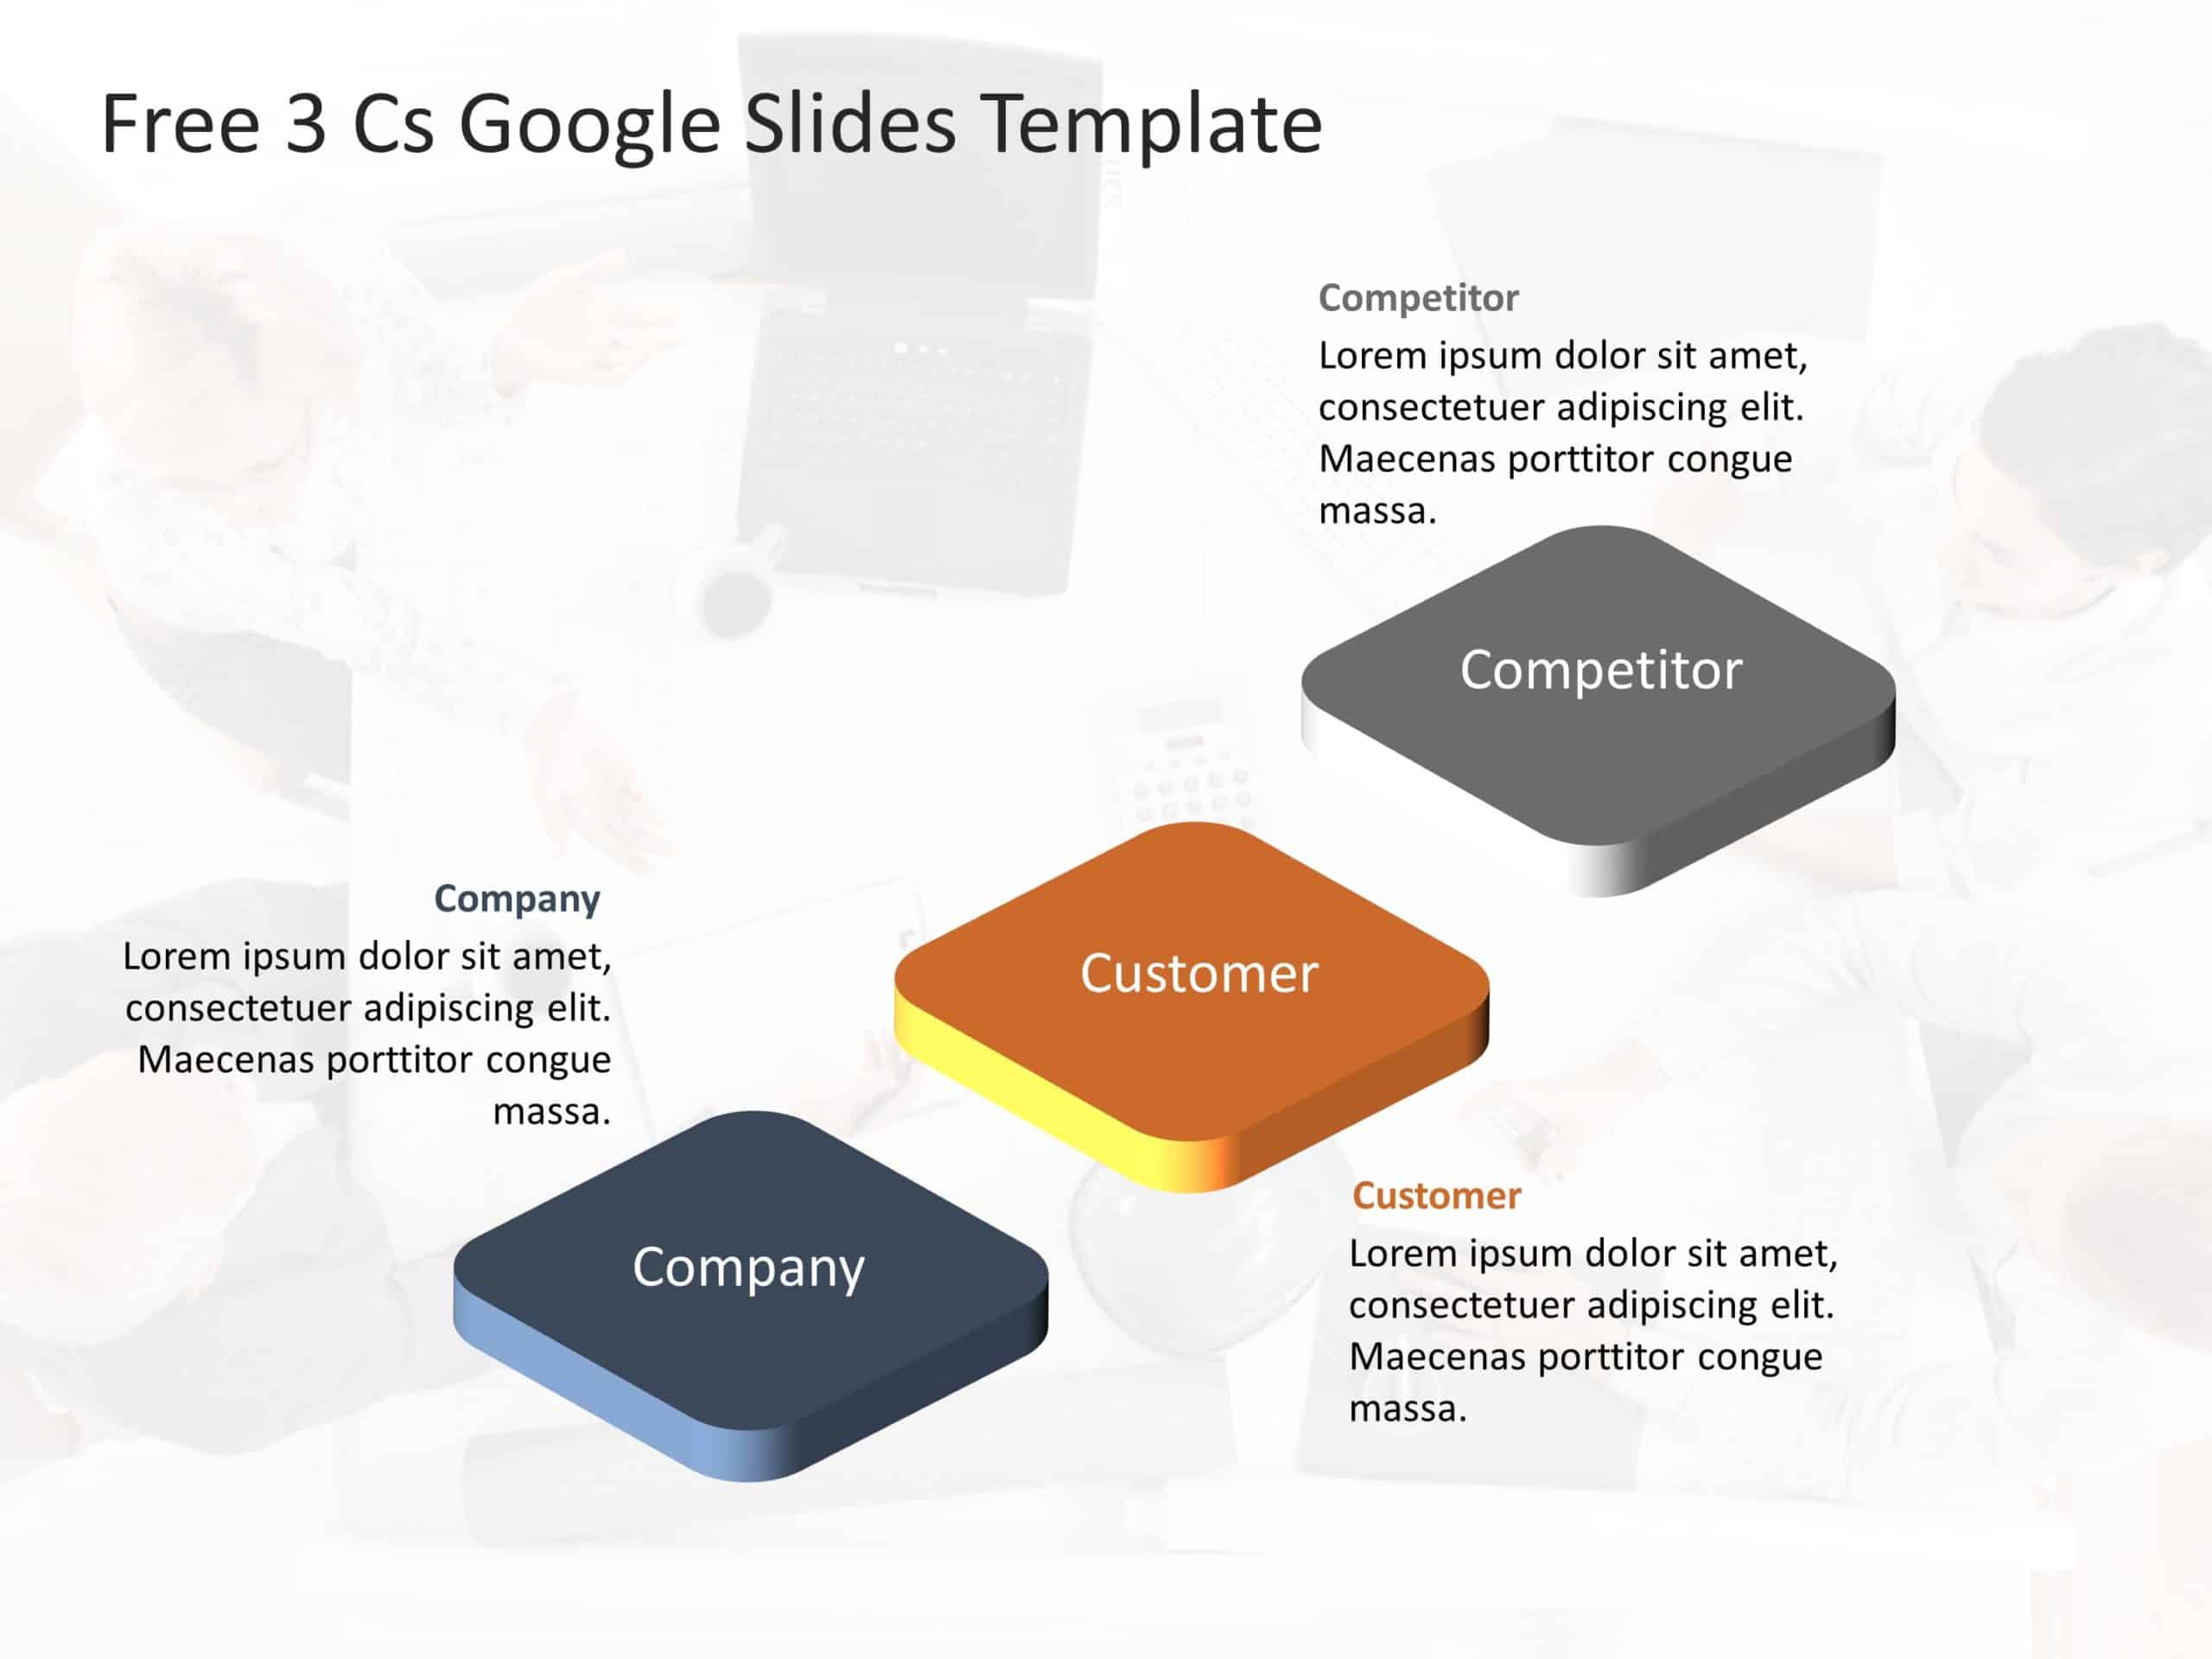 Free 3 Cs Google Slides Template 